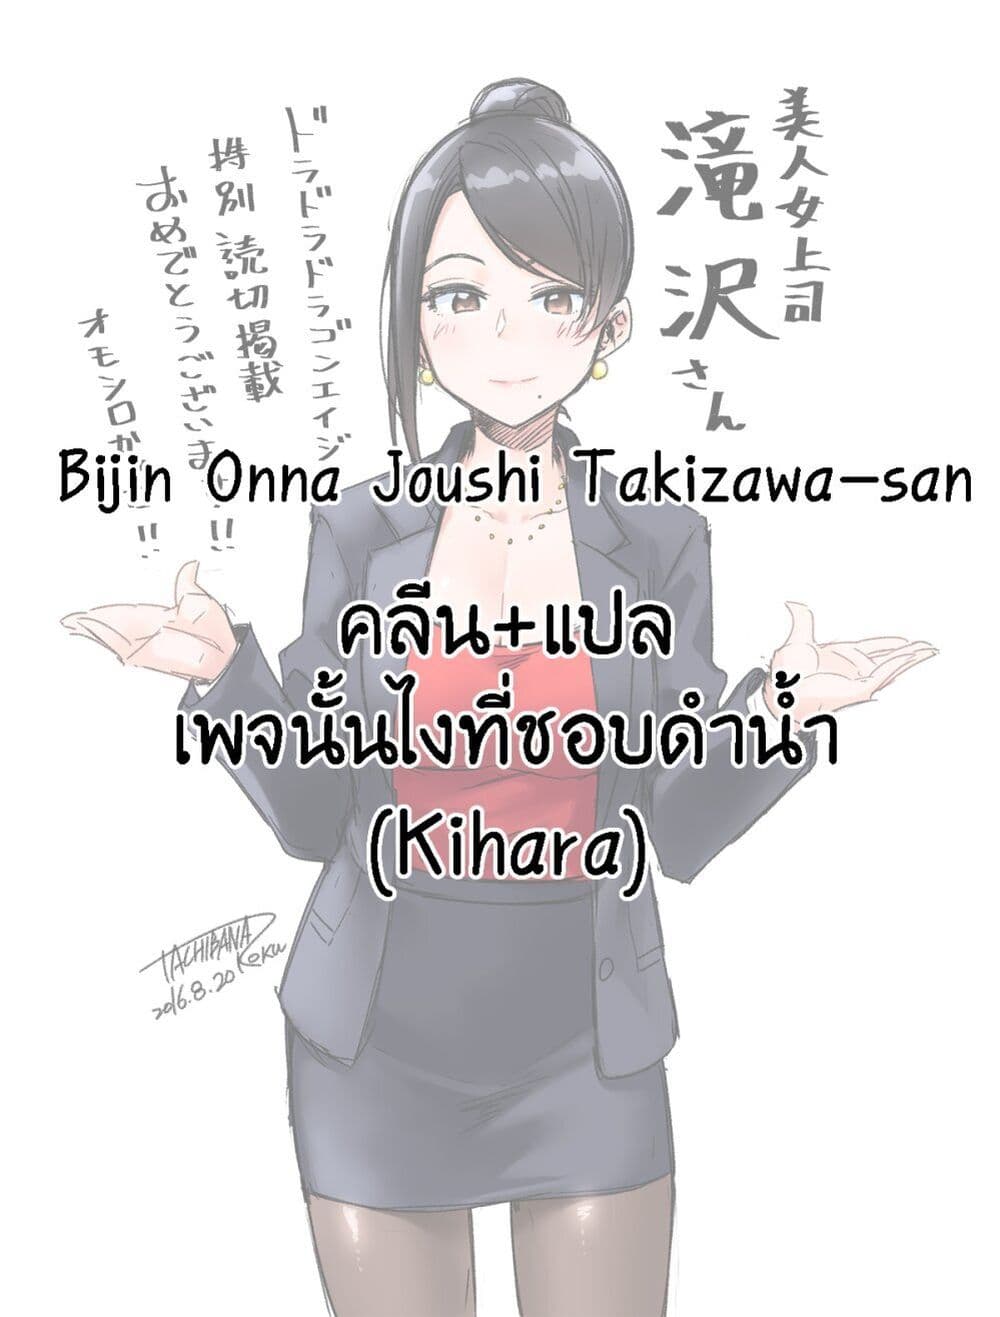 Bijin Onna Joushi Takizawa-san หัวหน้าสุดสวย ทากิซาวะซัง 26-26